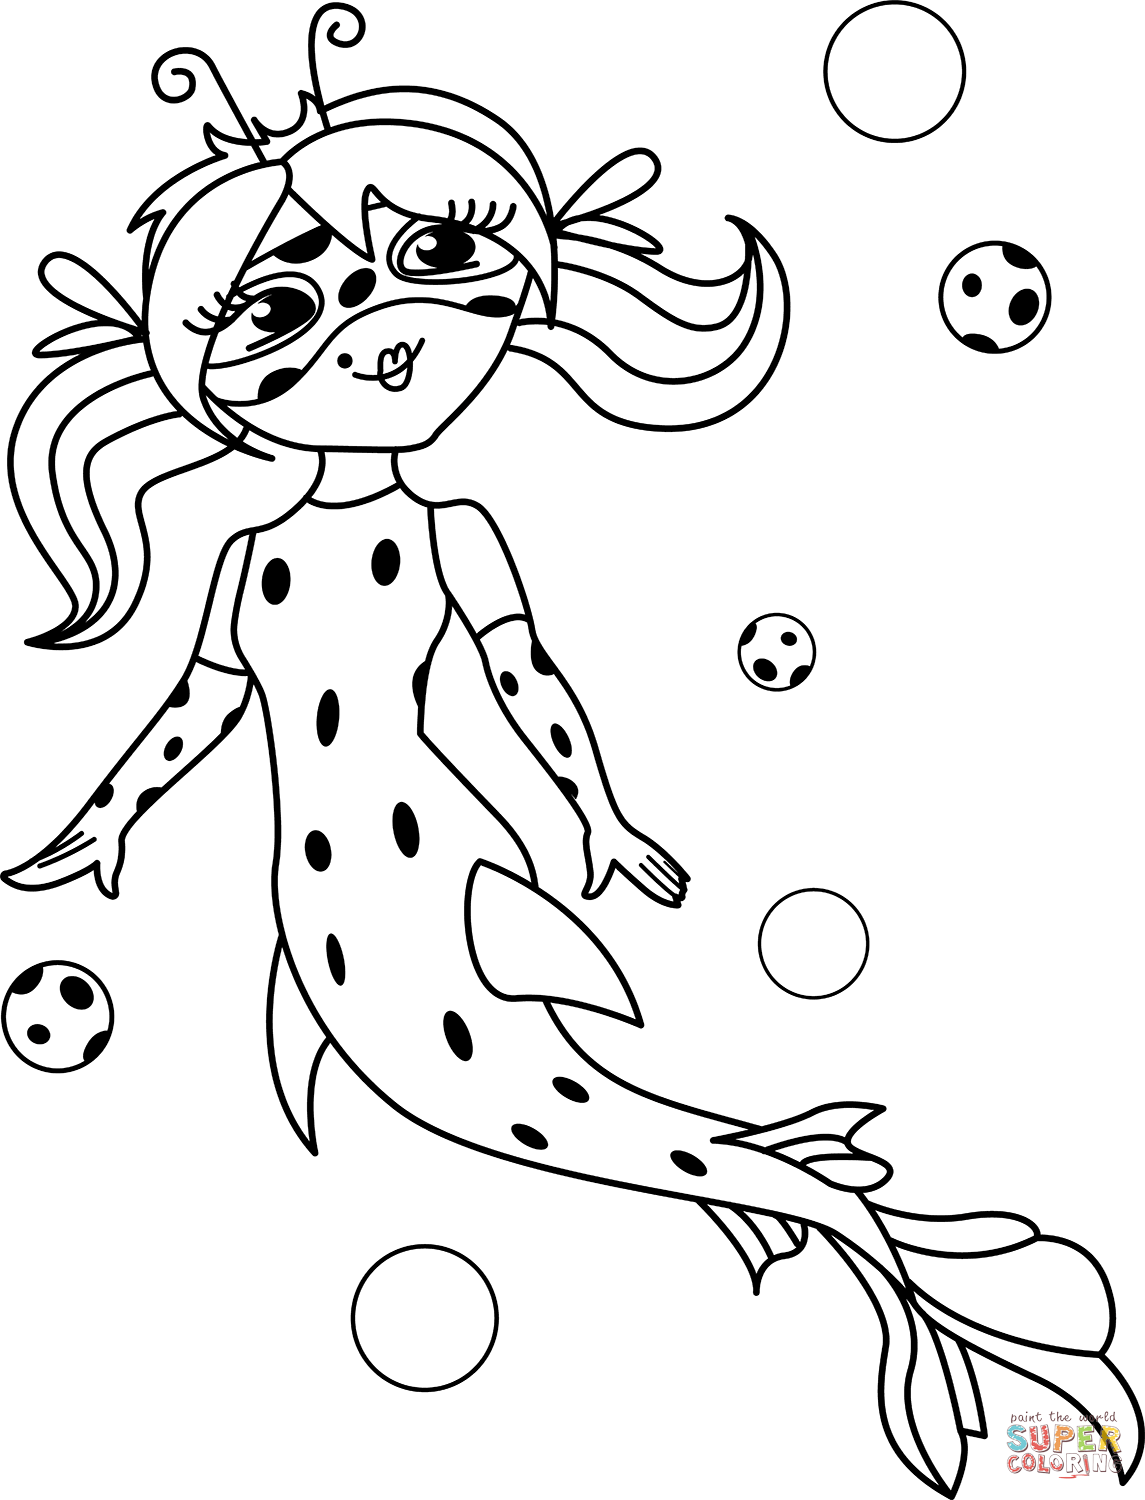 Ladybug mermaid coloring page free printable coloring pages